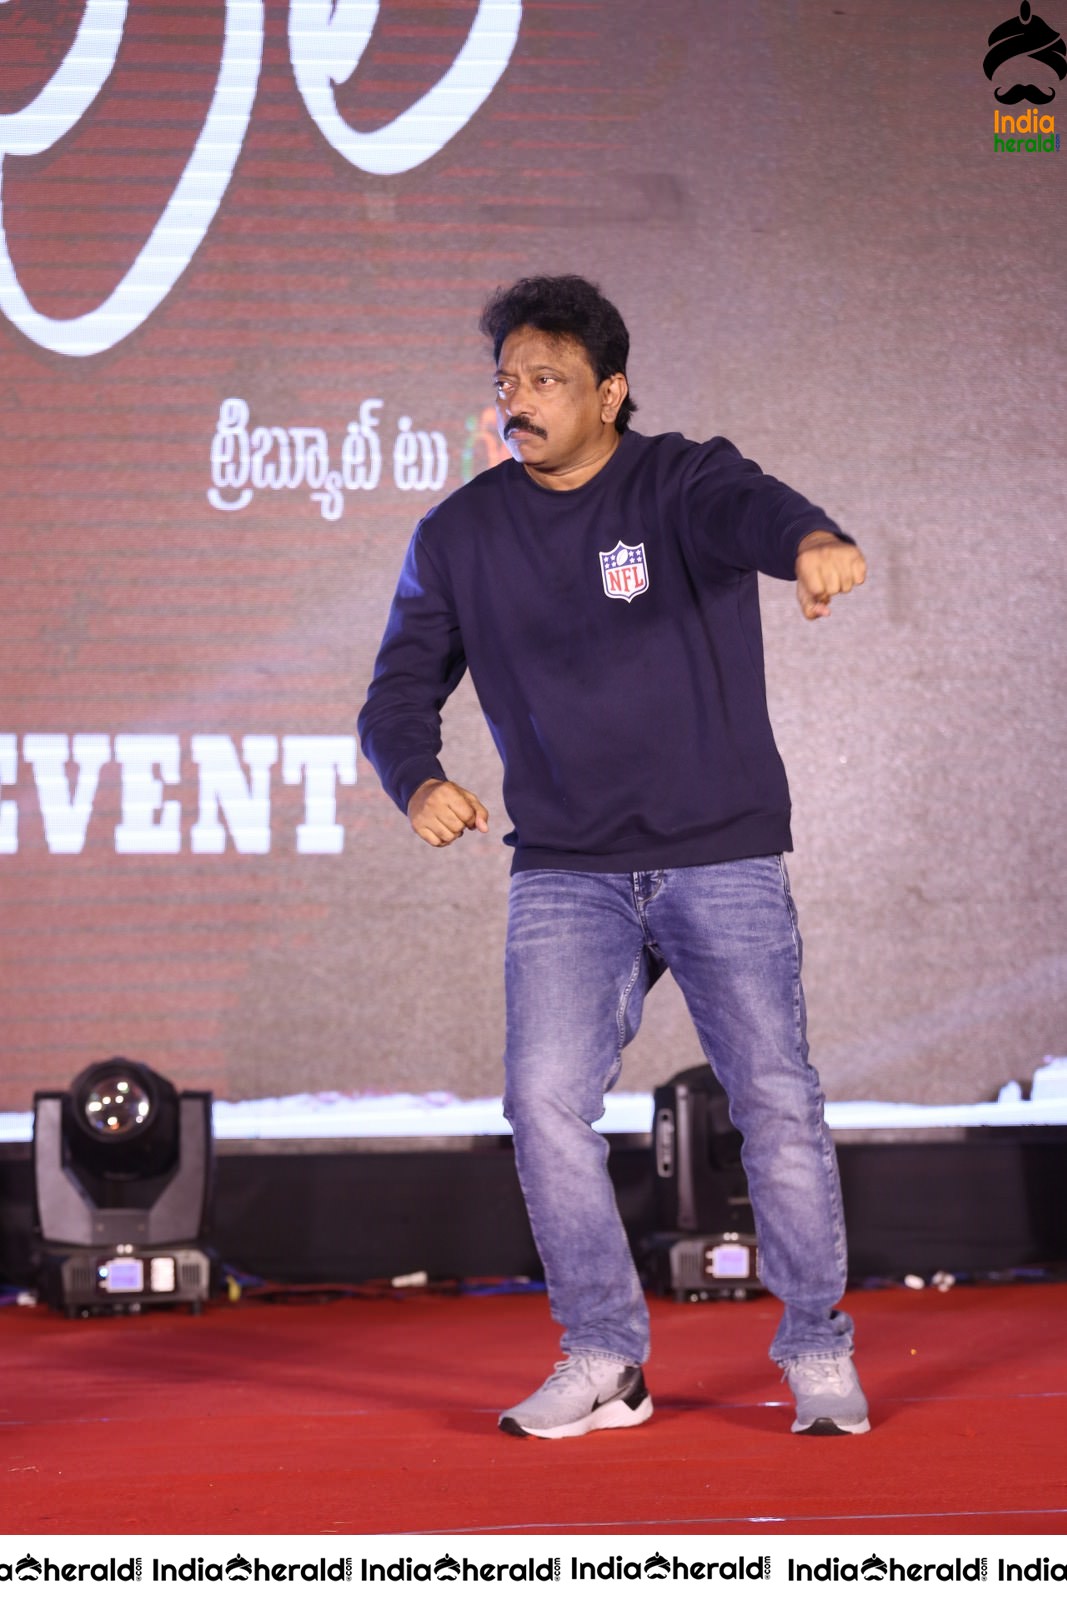 Director Ram Gopal Varma Funny Dance On the Stage Set 2